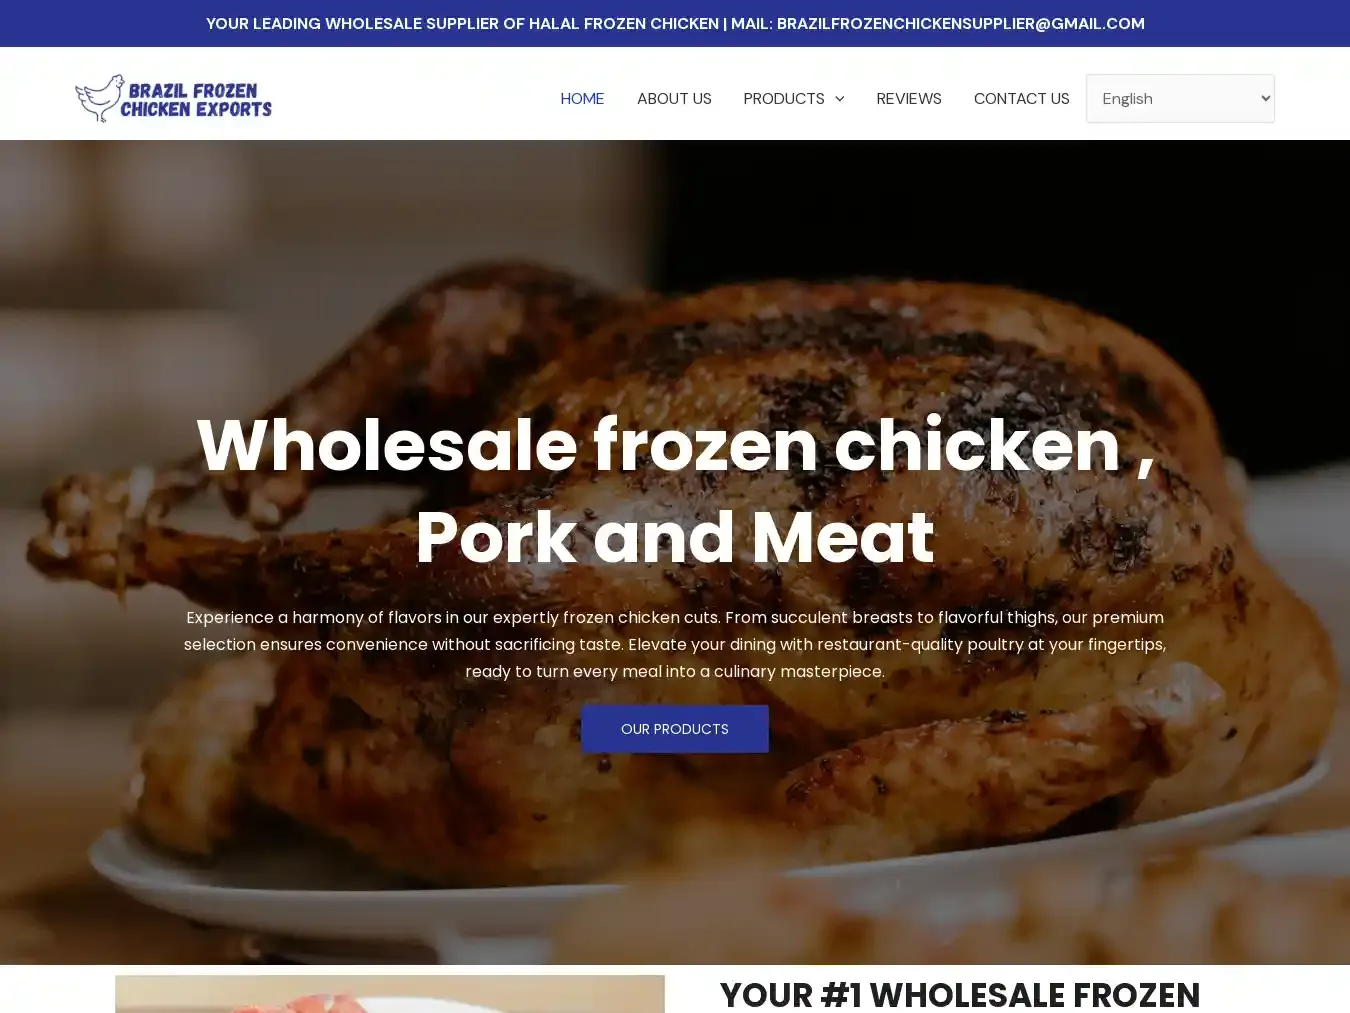 Brazilfrozenchickenexports.com Fraudulent Non-Delivery website.